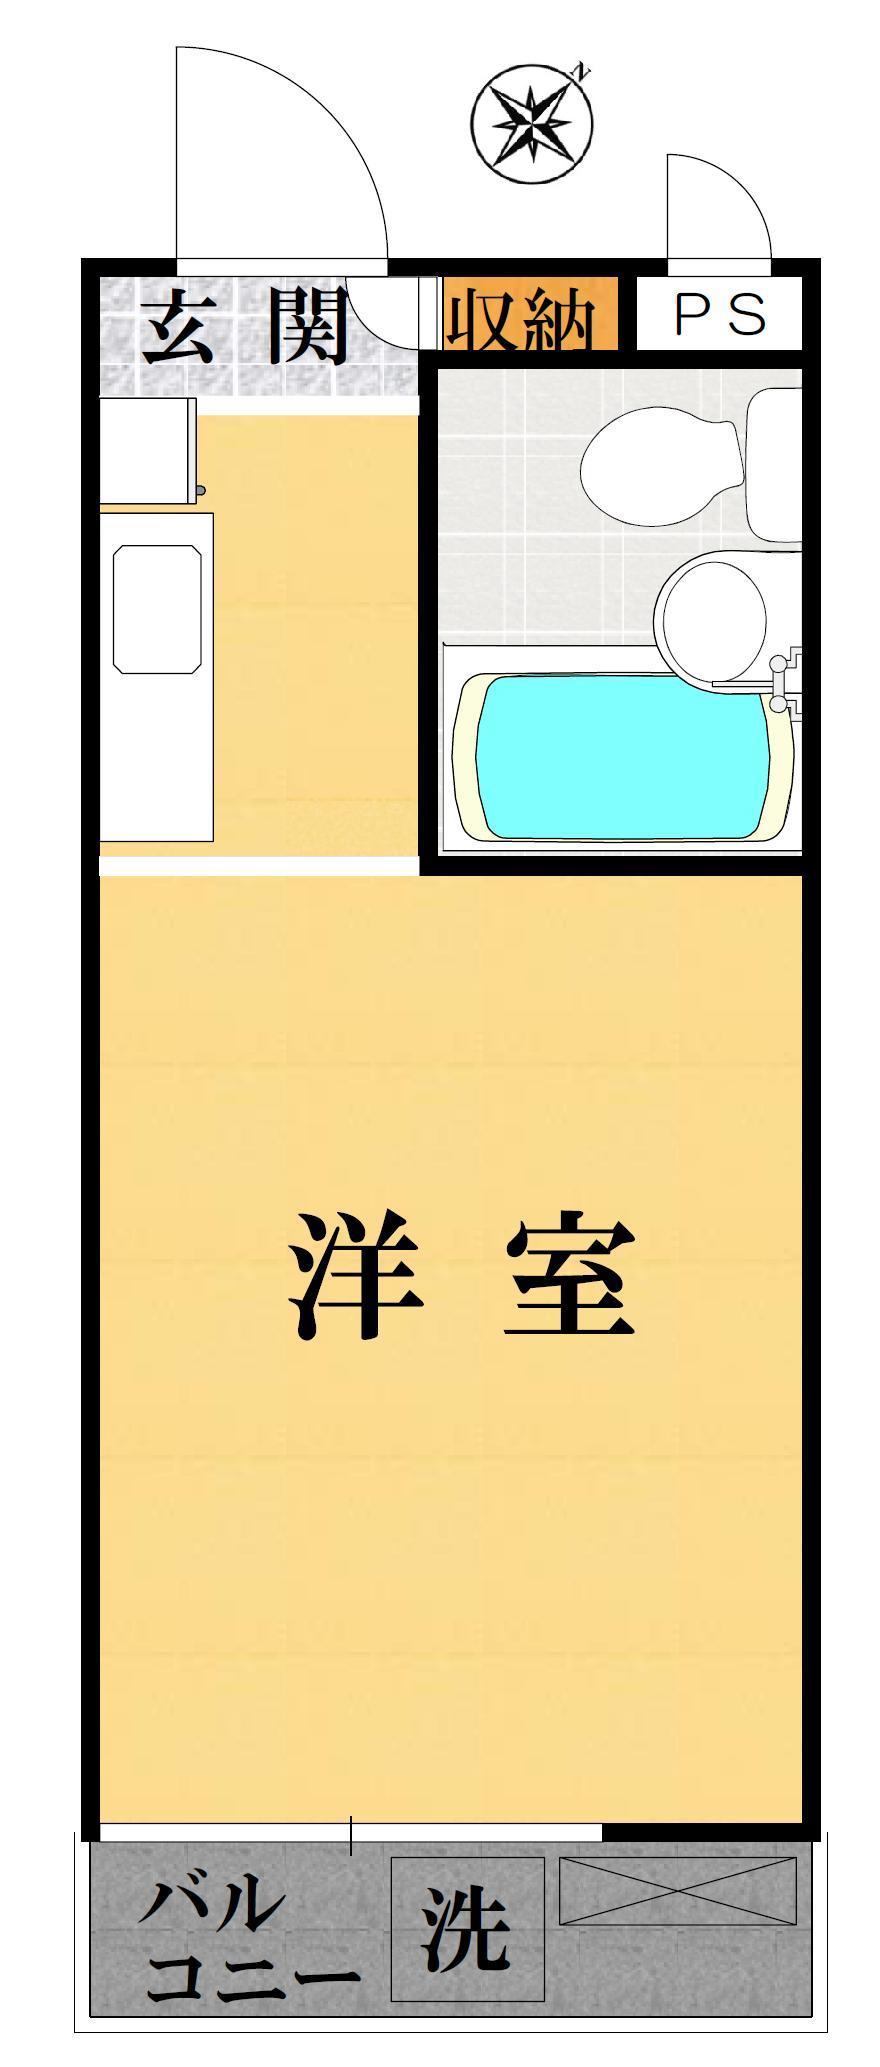 Floor plan. Price 5.8 million yen, Footprint 13.5 sq m , Balcony area 2.2 sq m